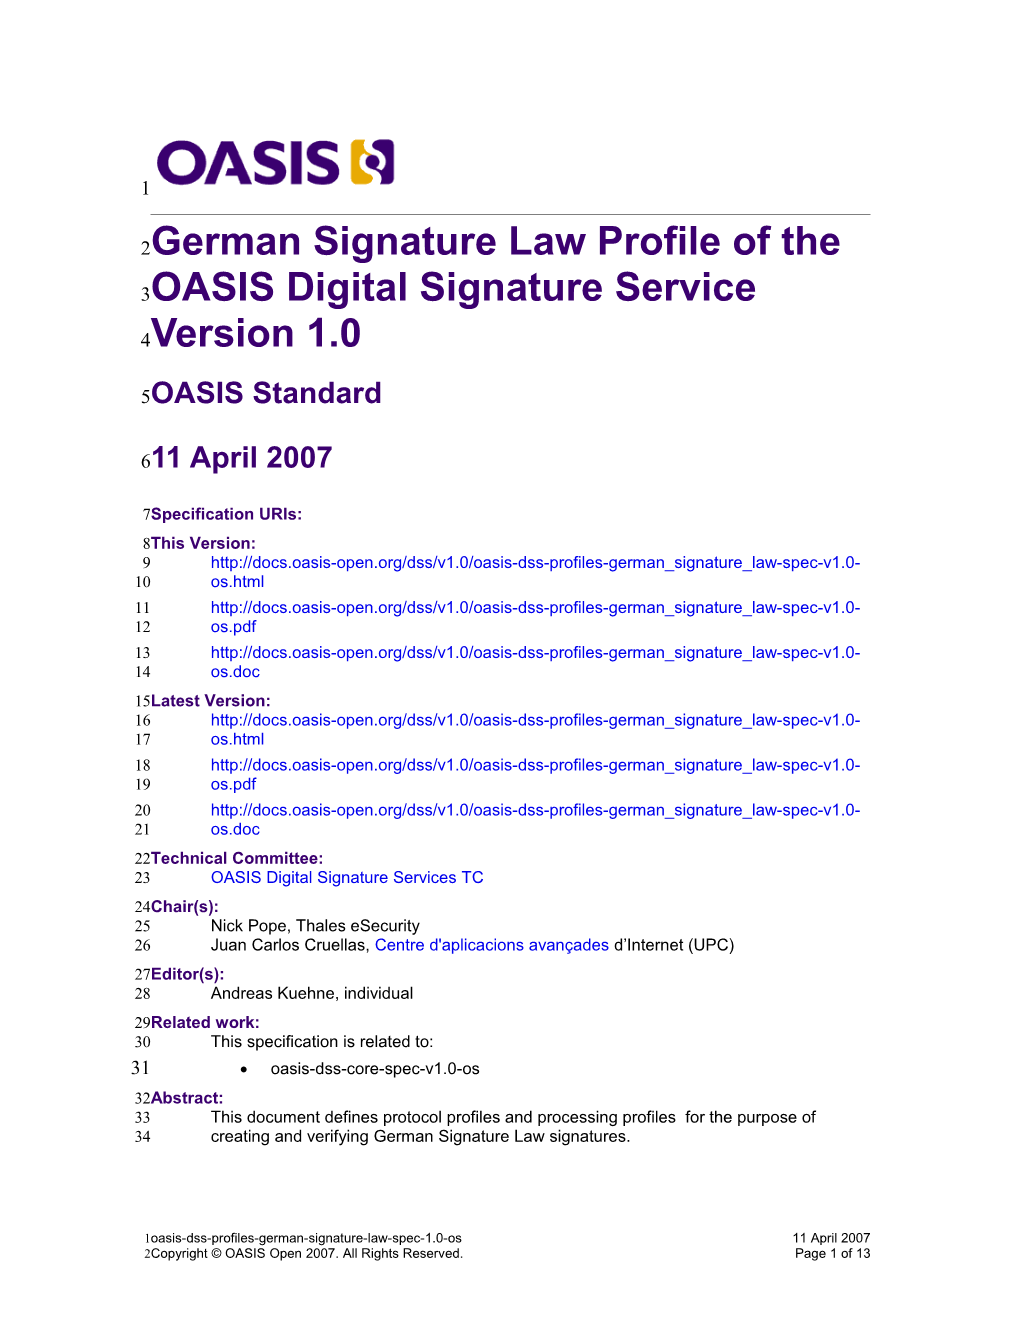 German Signature Law Profile of the OASIS Digital Signature Serviceversion 1.0